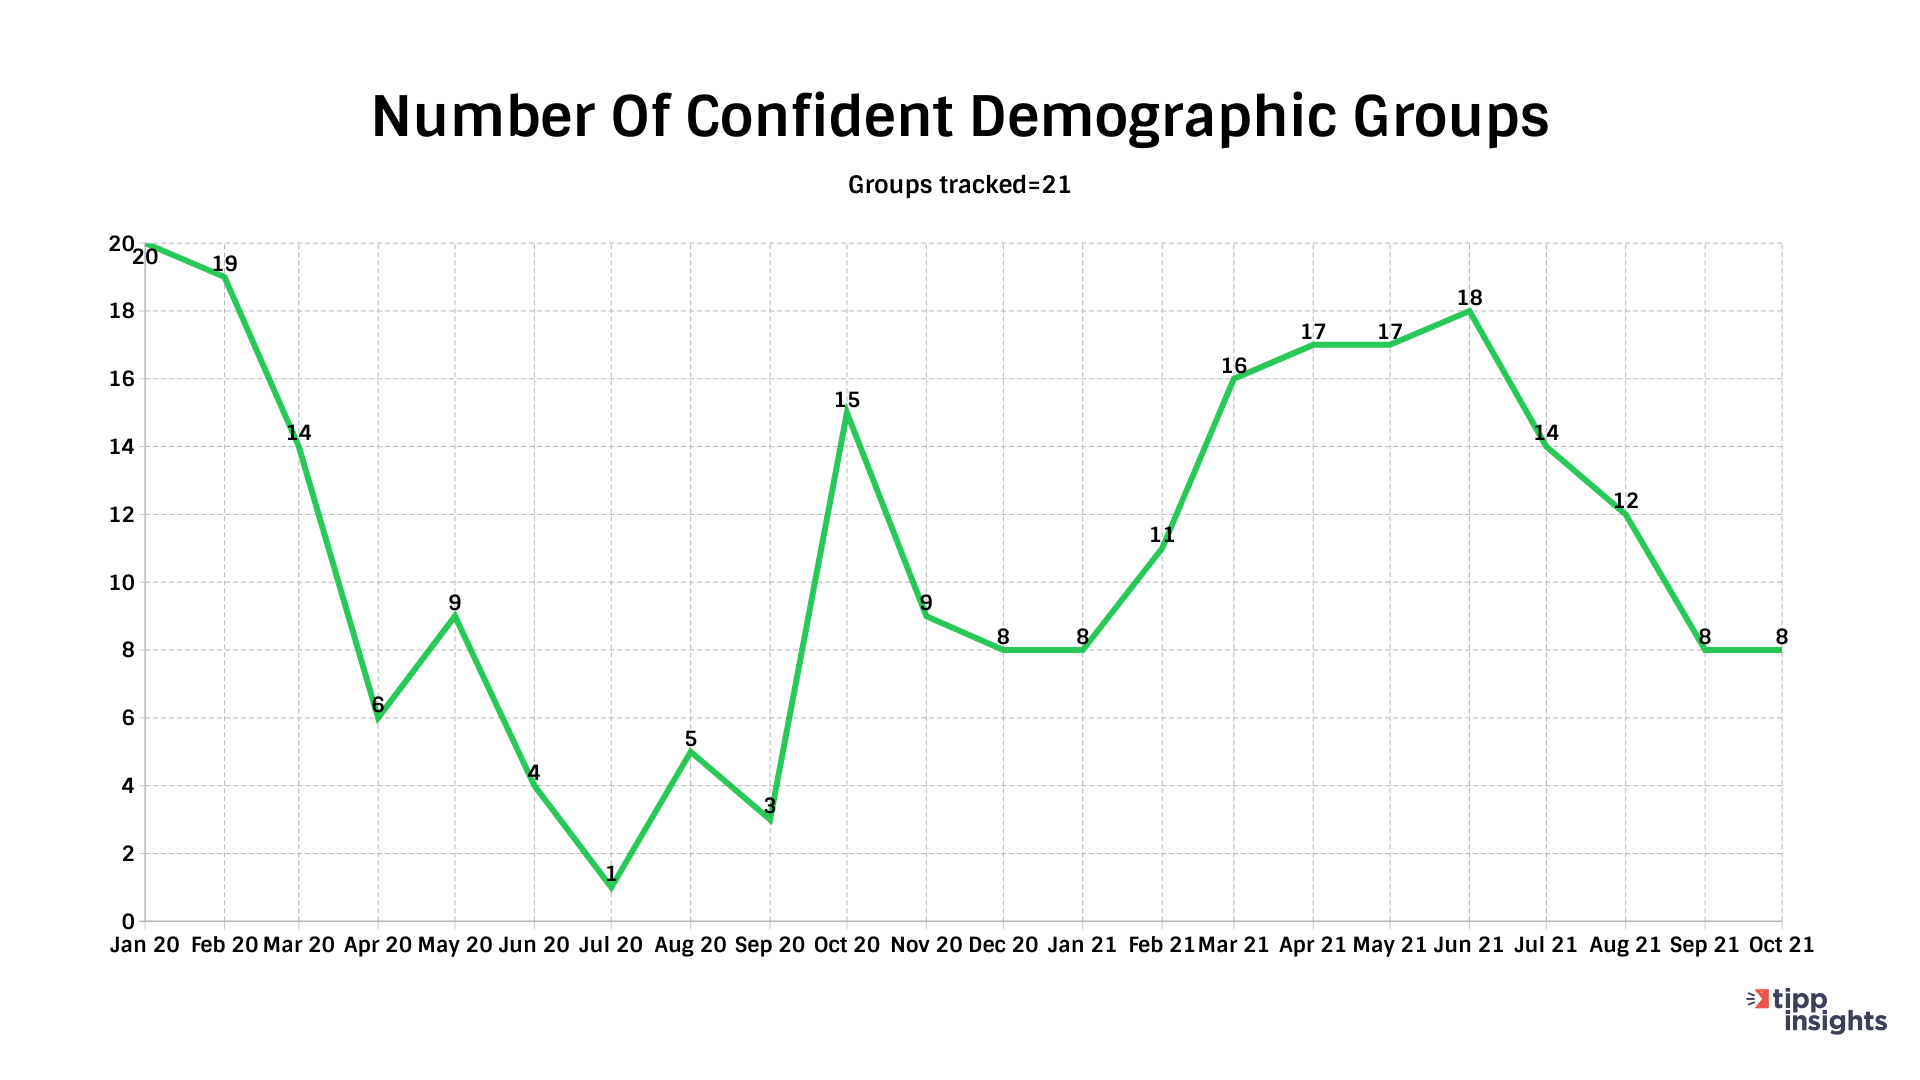 IBD/TIPP Economic Optimism number of demographic Groups Confident in U.S. Economy